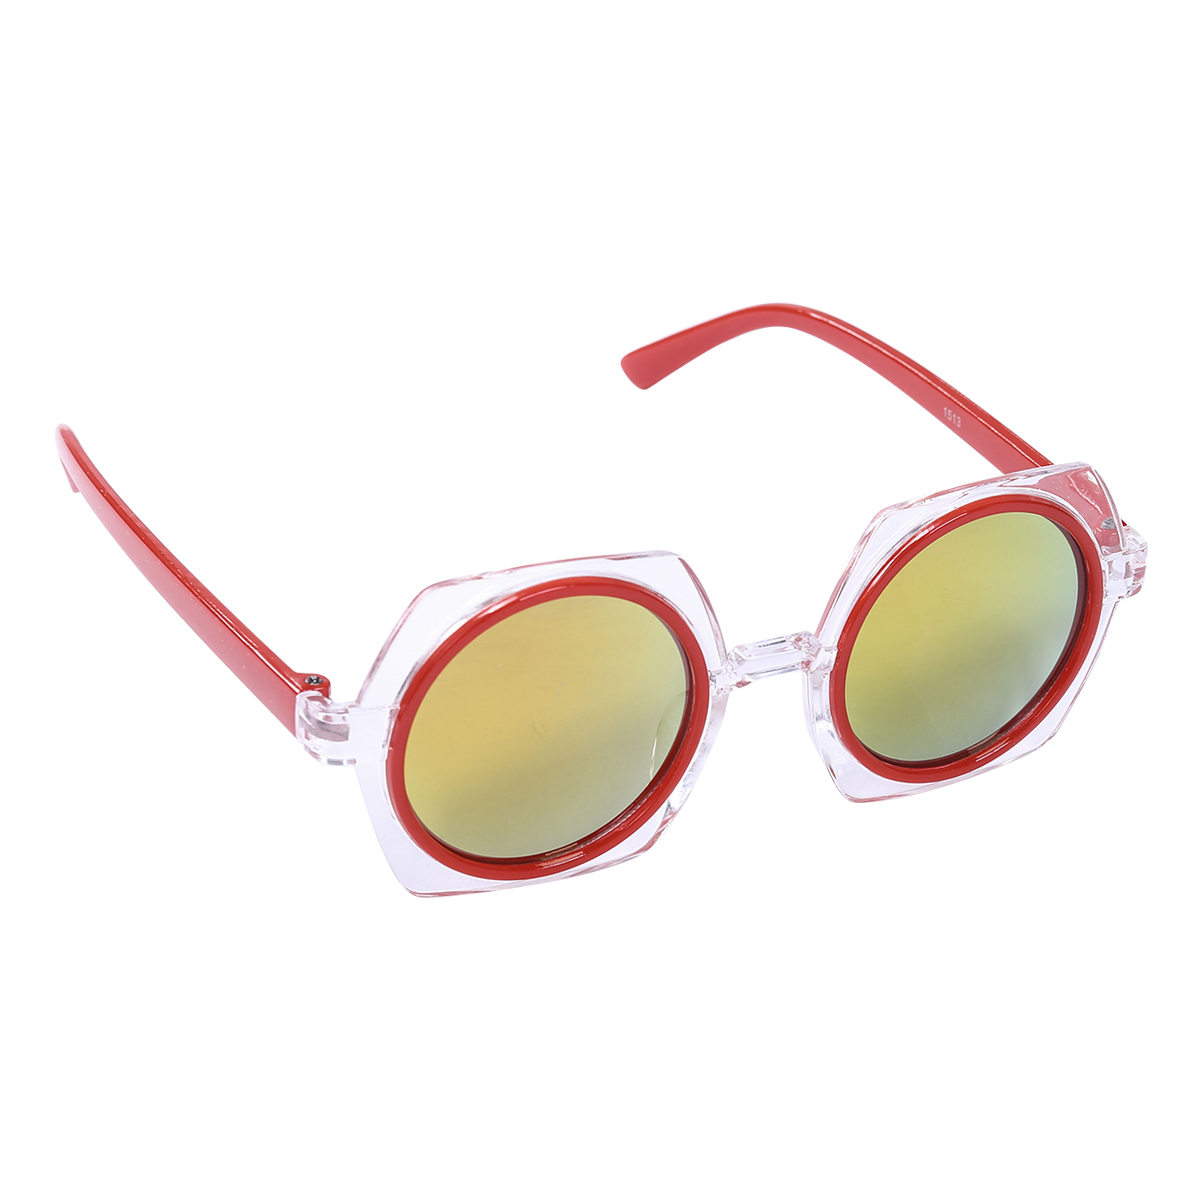 Bmnmsl Kids Vintage Funny Sunglasses Irregular-shaped Anti-UV Shades Glasses - image 1 of 6